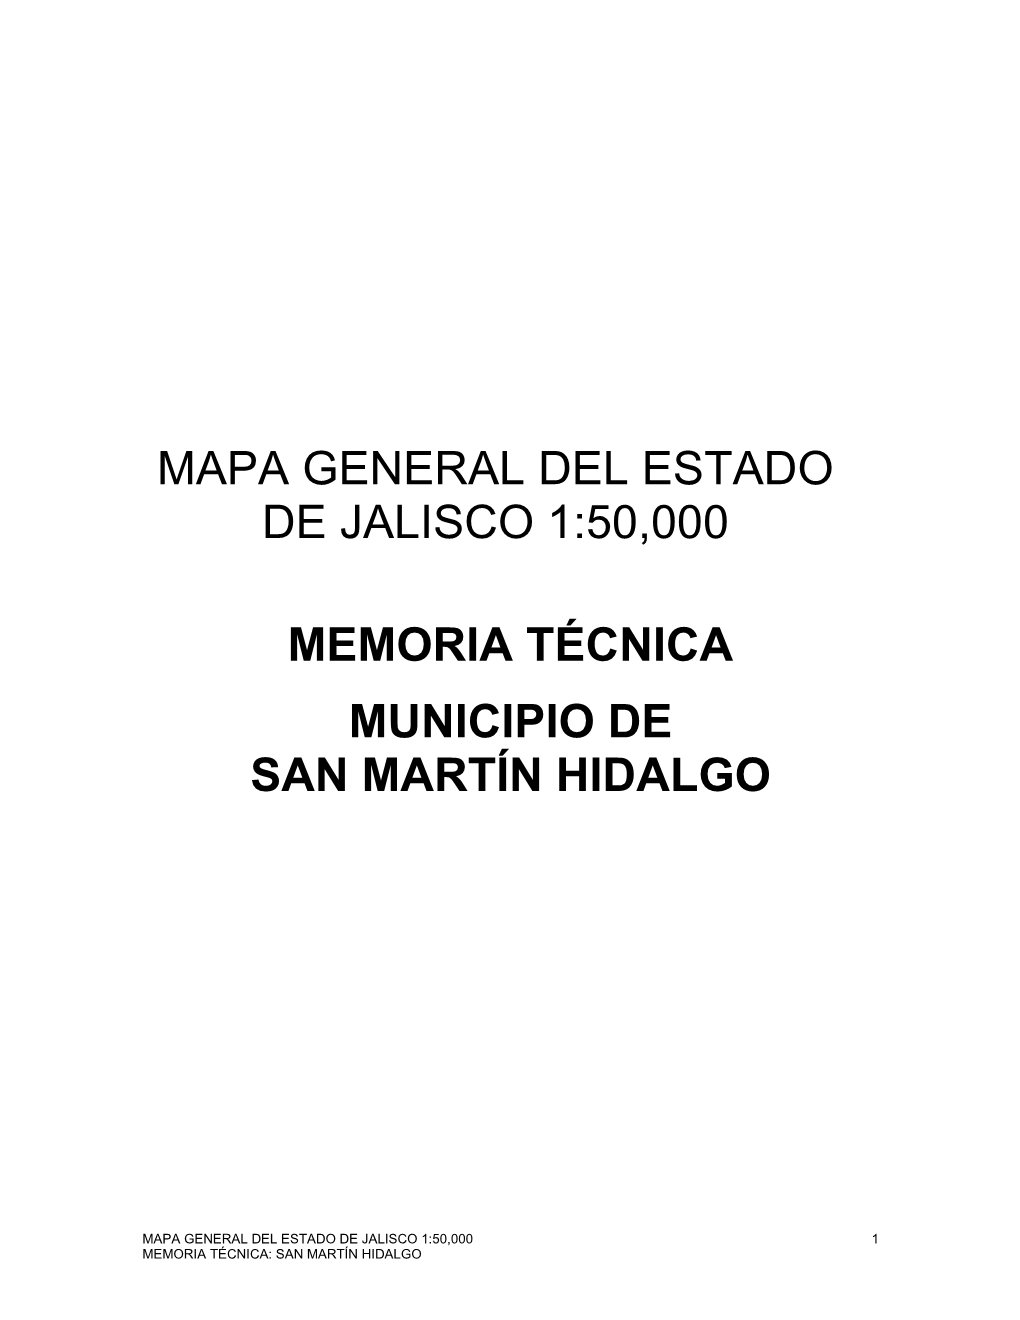 San Martín Hidalgo